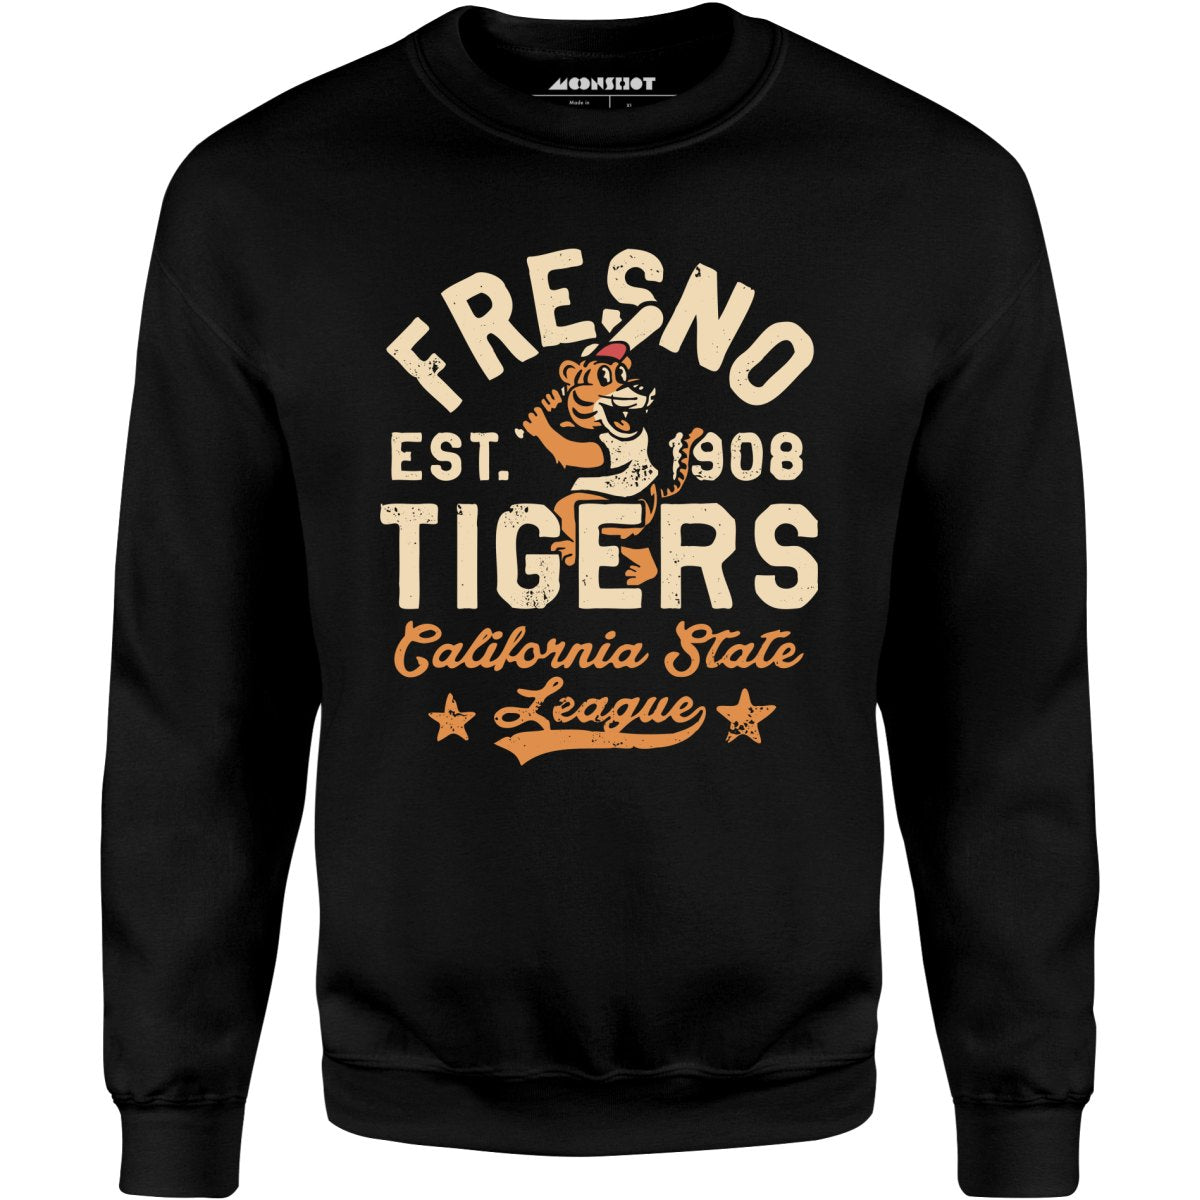 Fresno Tigers - California - Vintage Defunct Baseball Teams - Unisex Sweatshirt